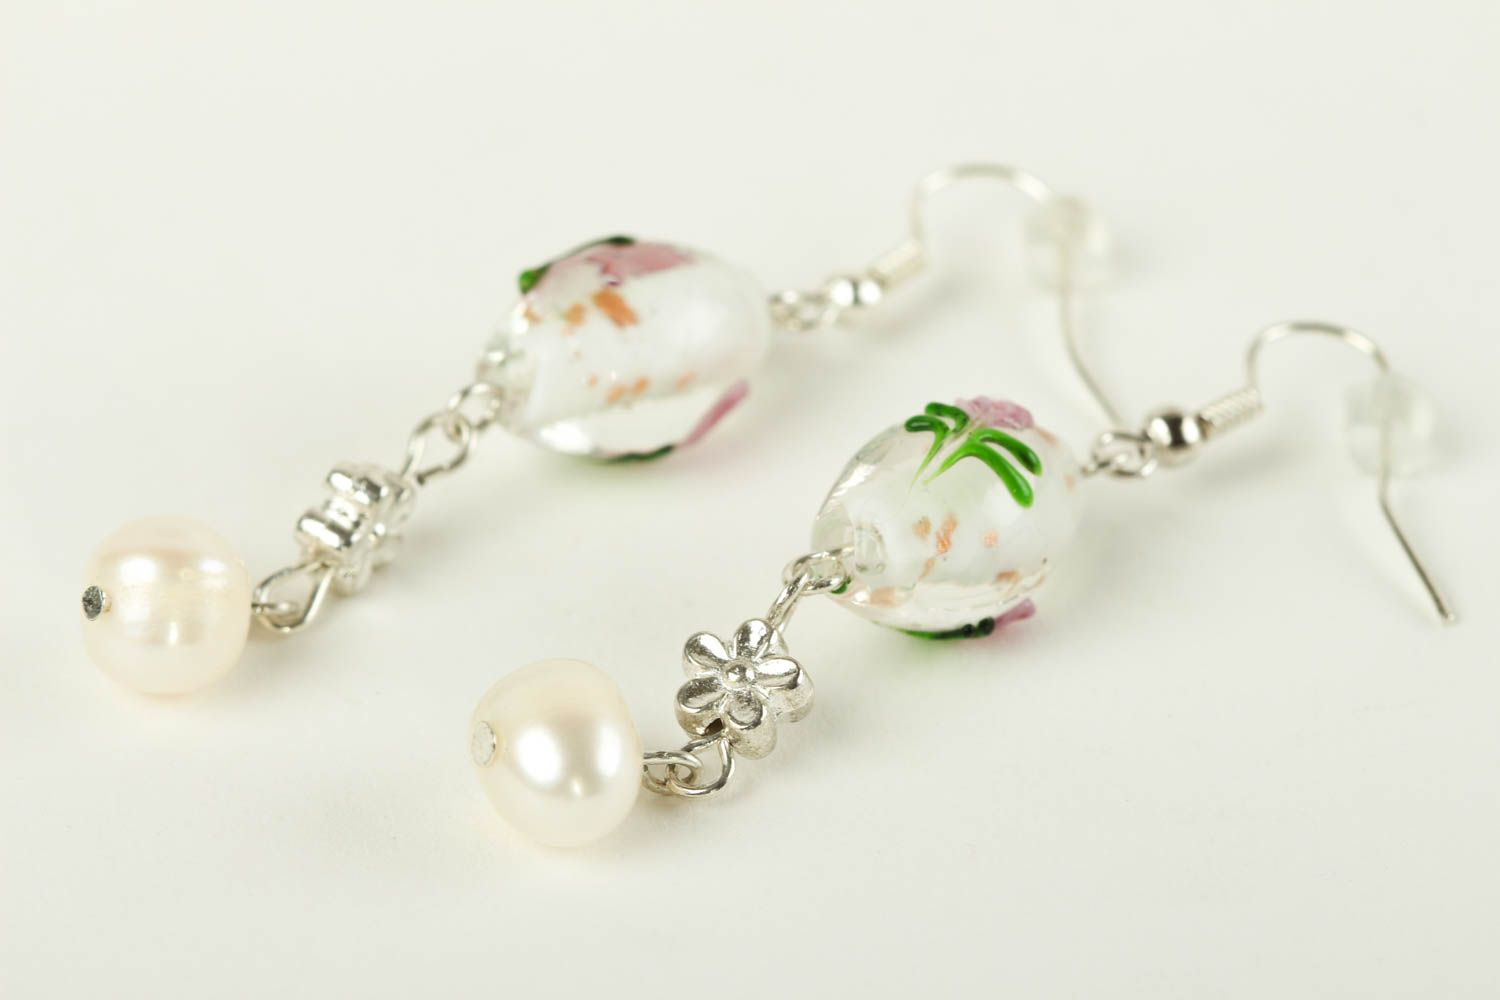 Glass jewelry glass earrings handmade glass accessories stylish jewelry for her photo 3